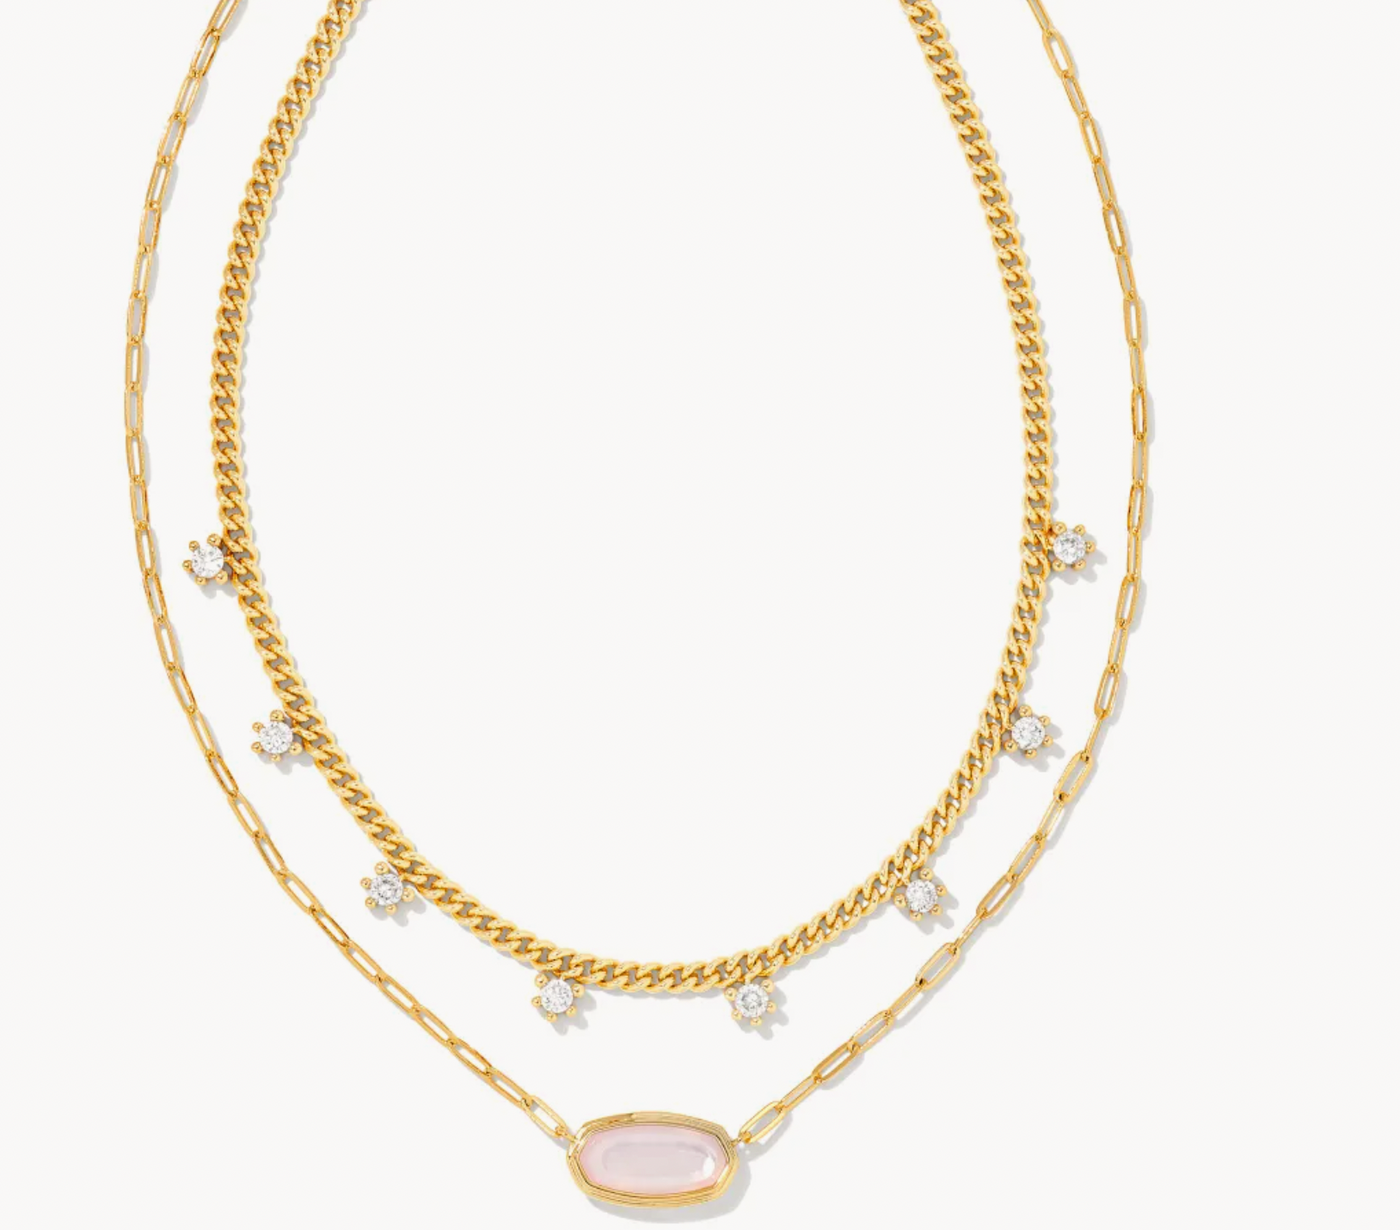 Kendra Scott Framed Elisa Gold Multi Strand Necklace in Pink Opalite Illusion